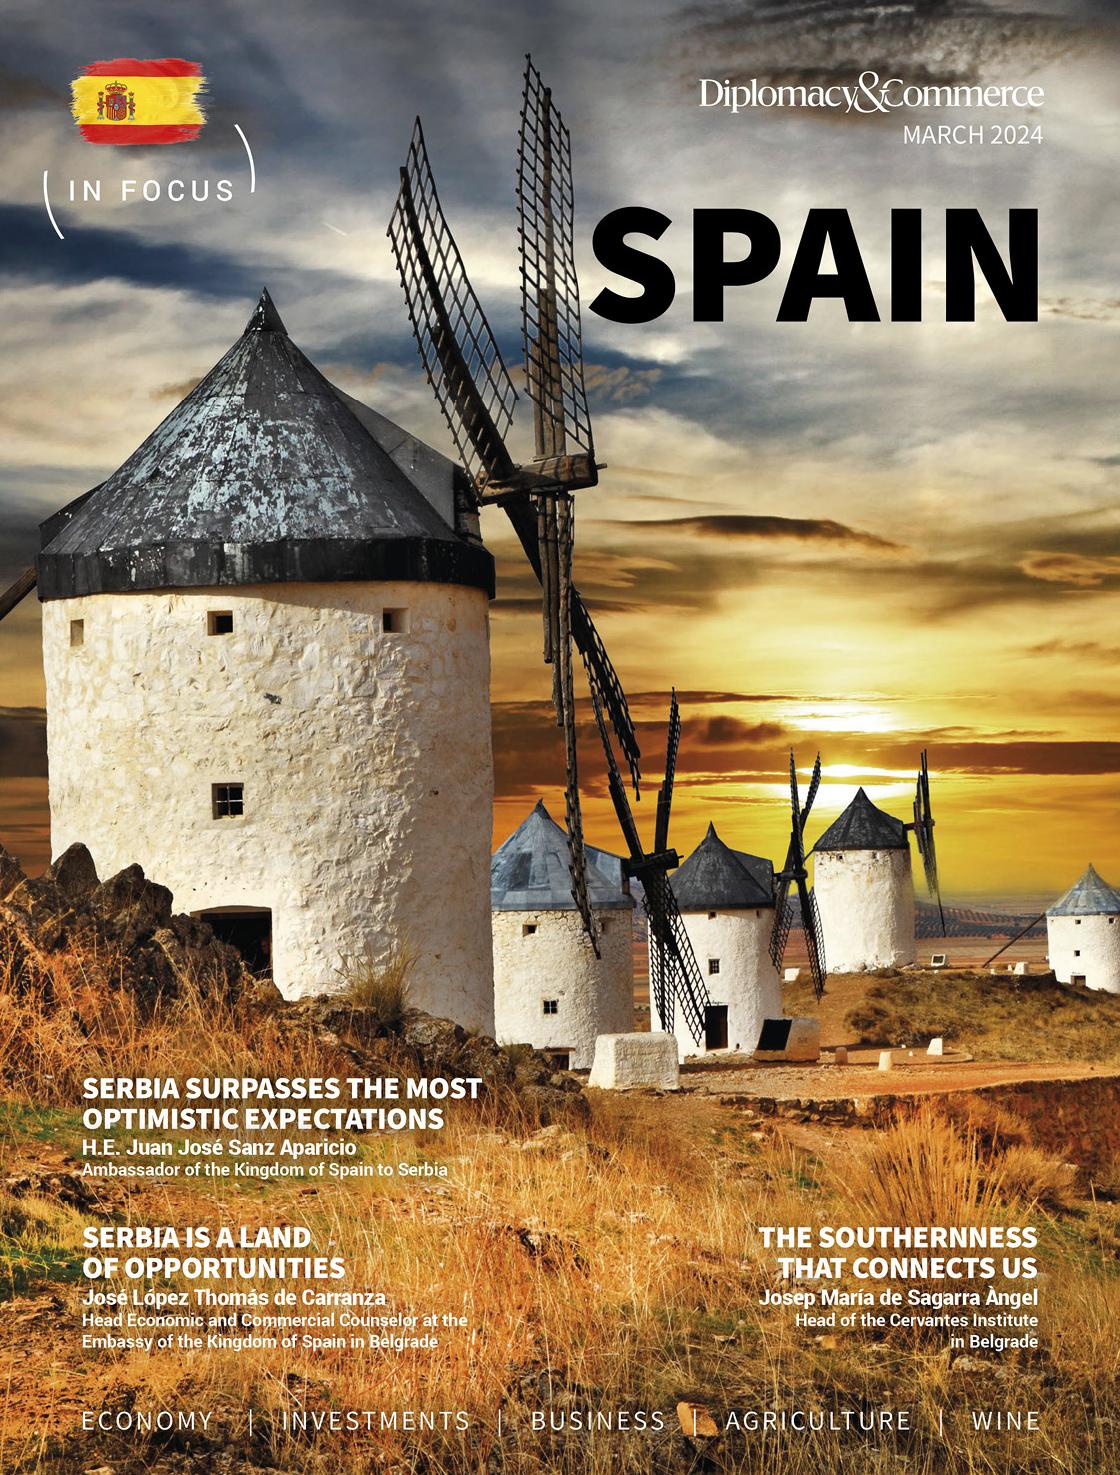 DandC - Diplomacy&Commerce - In Focus - Spain 2024 - cover